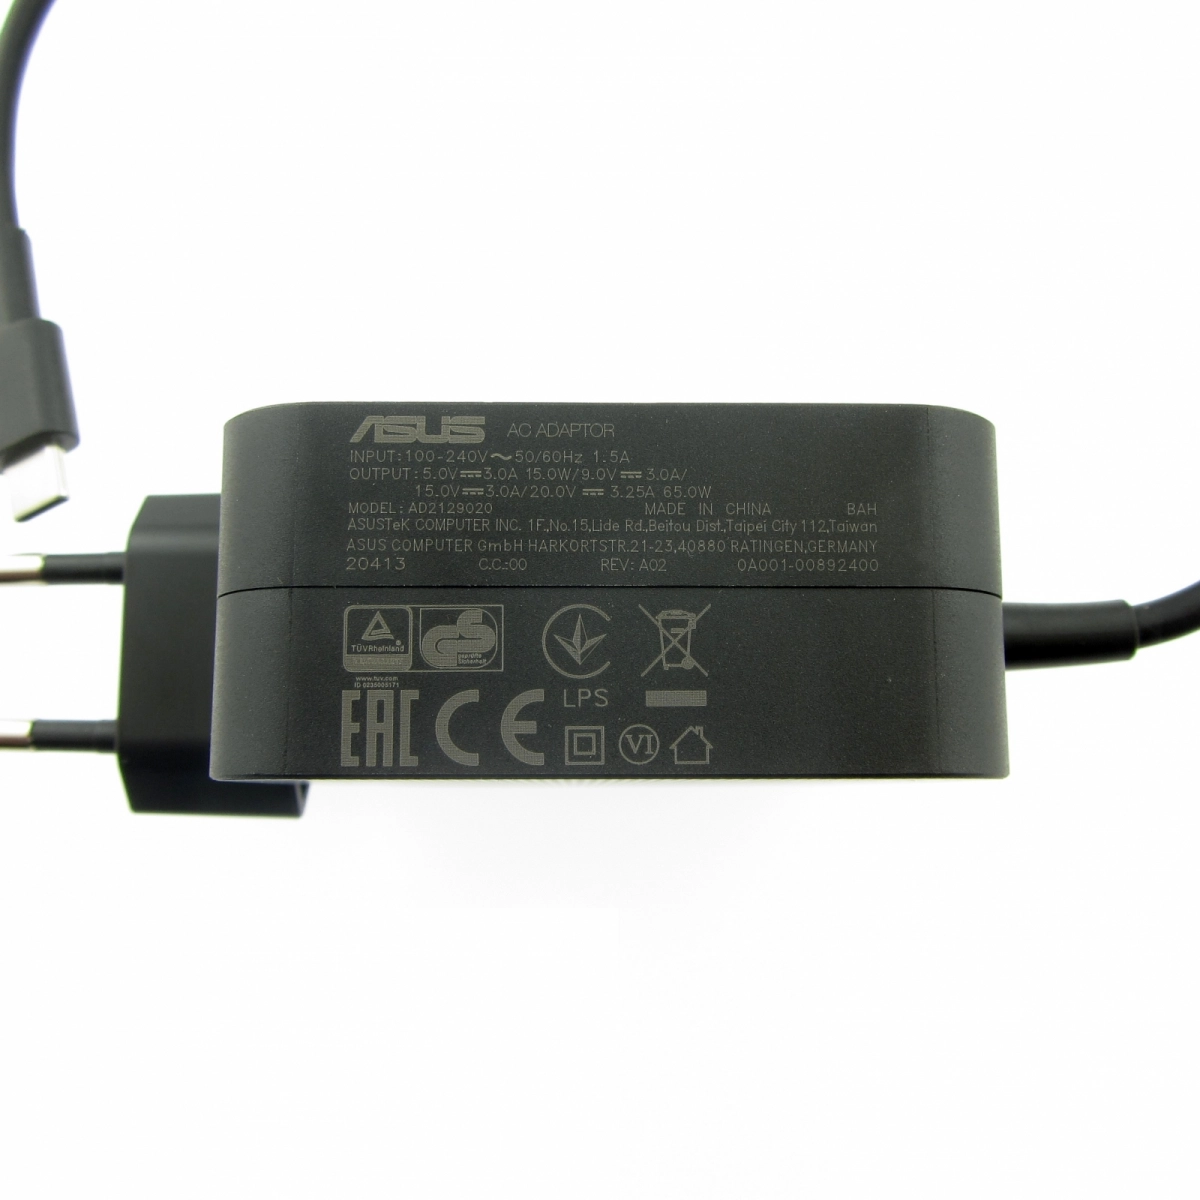 Original Netzteil für ASUS 0A001-00447900, 20V, 3.25A, Stecker USB-C, 65W